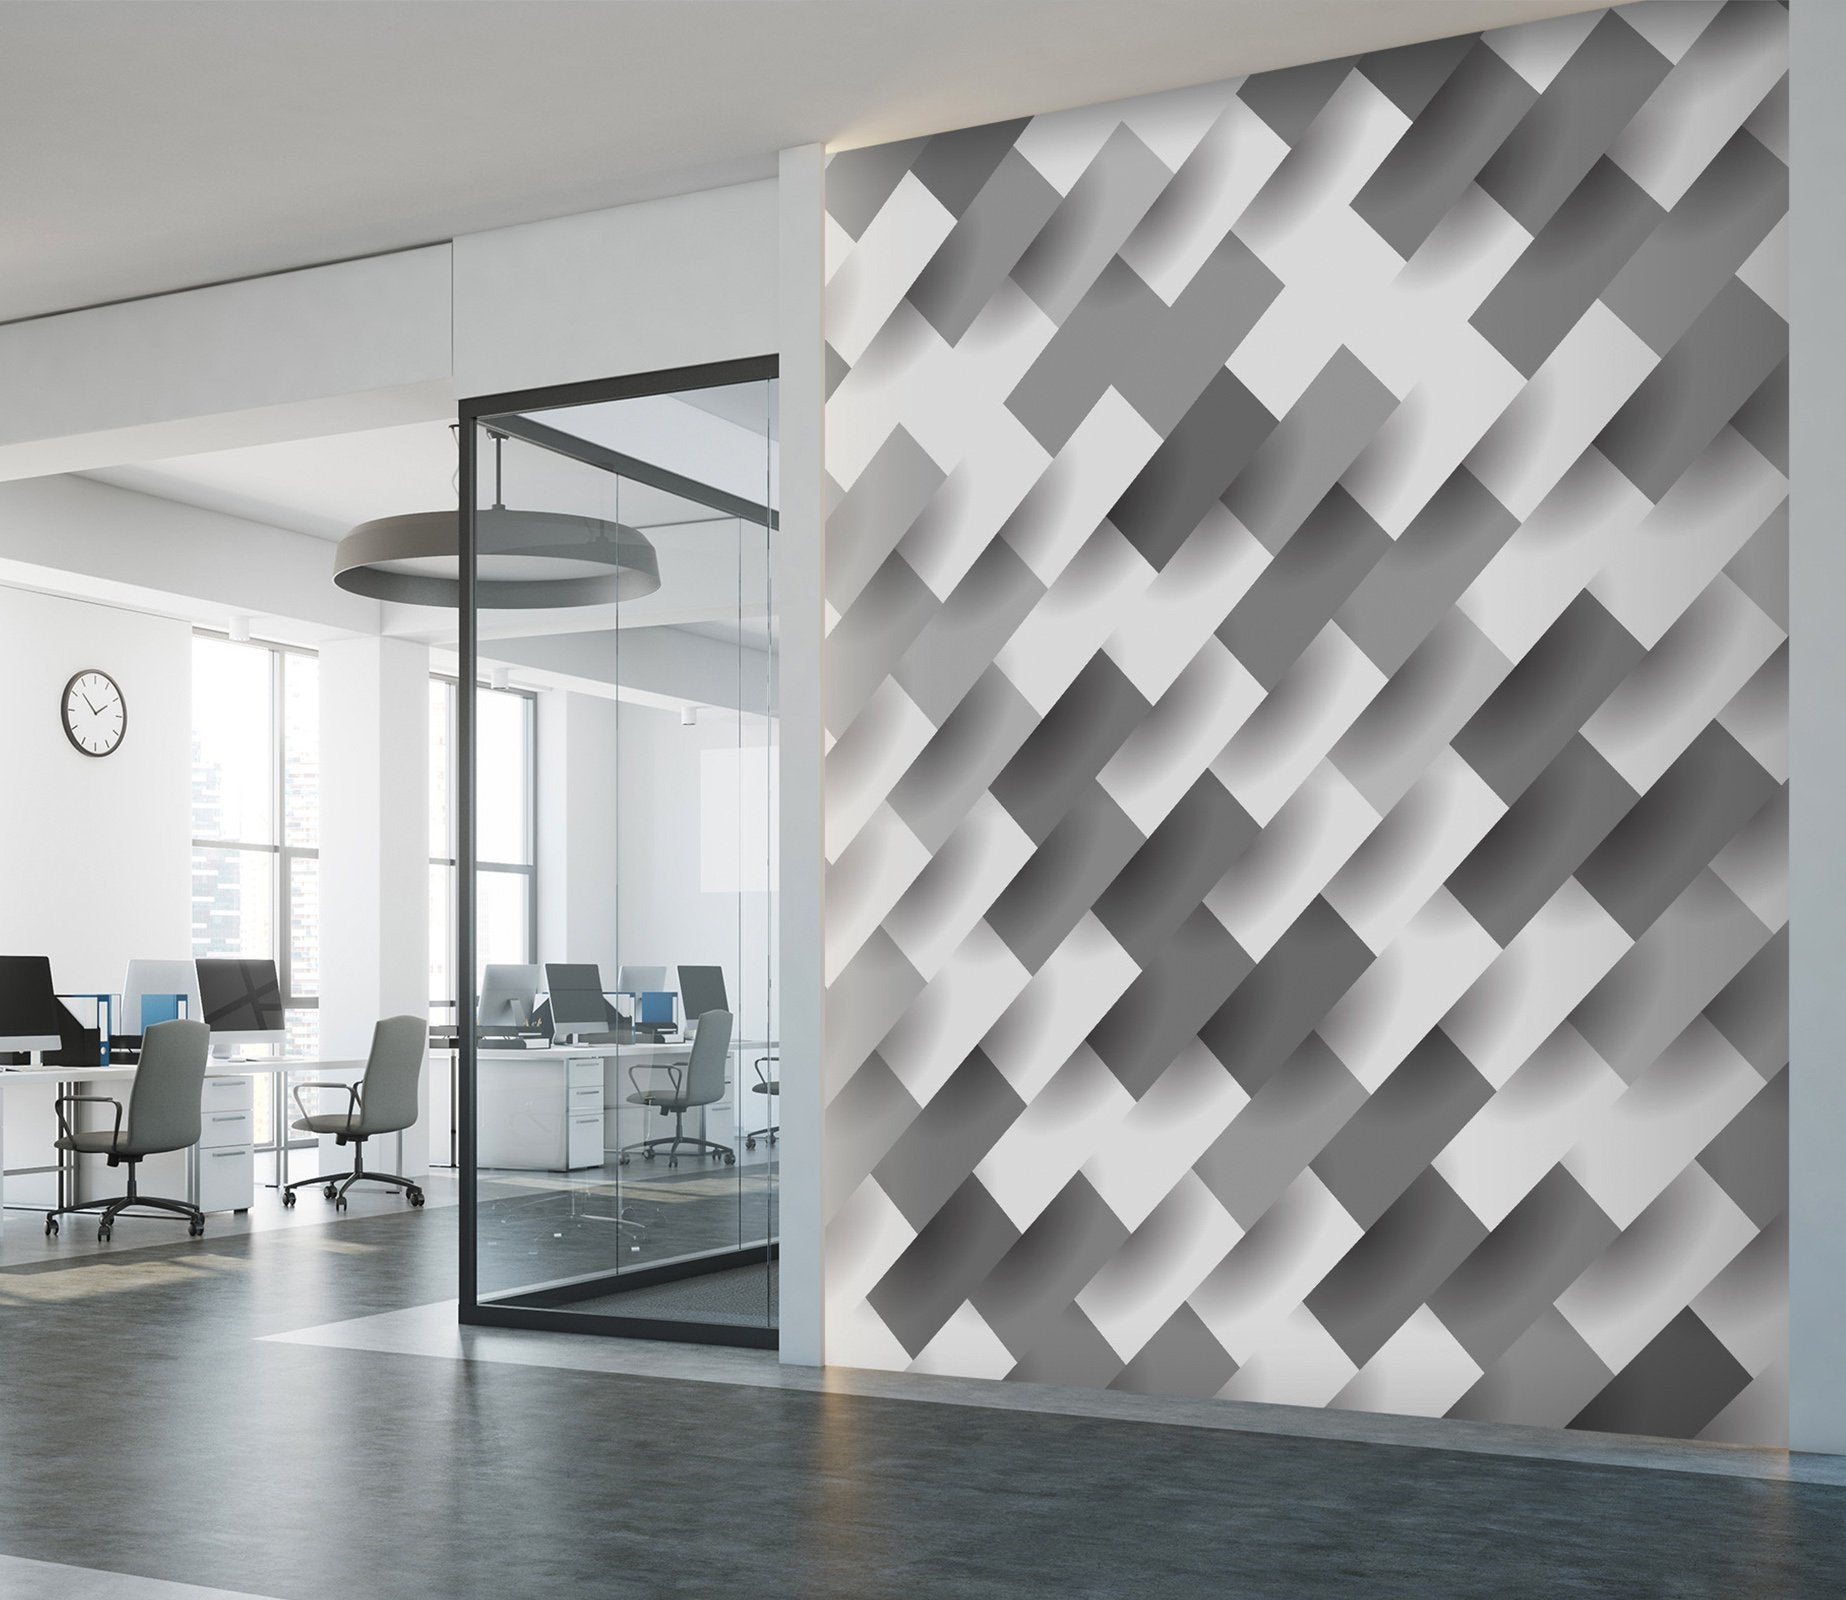 3D Abstract Diagonal 012 Marble Tile Texture Wallpaper AJ Wallpaper 2 